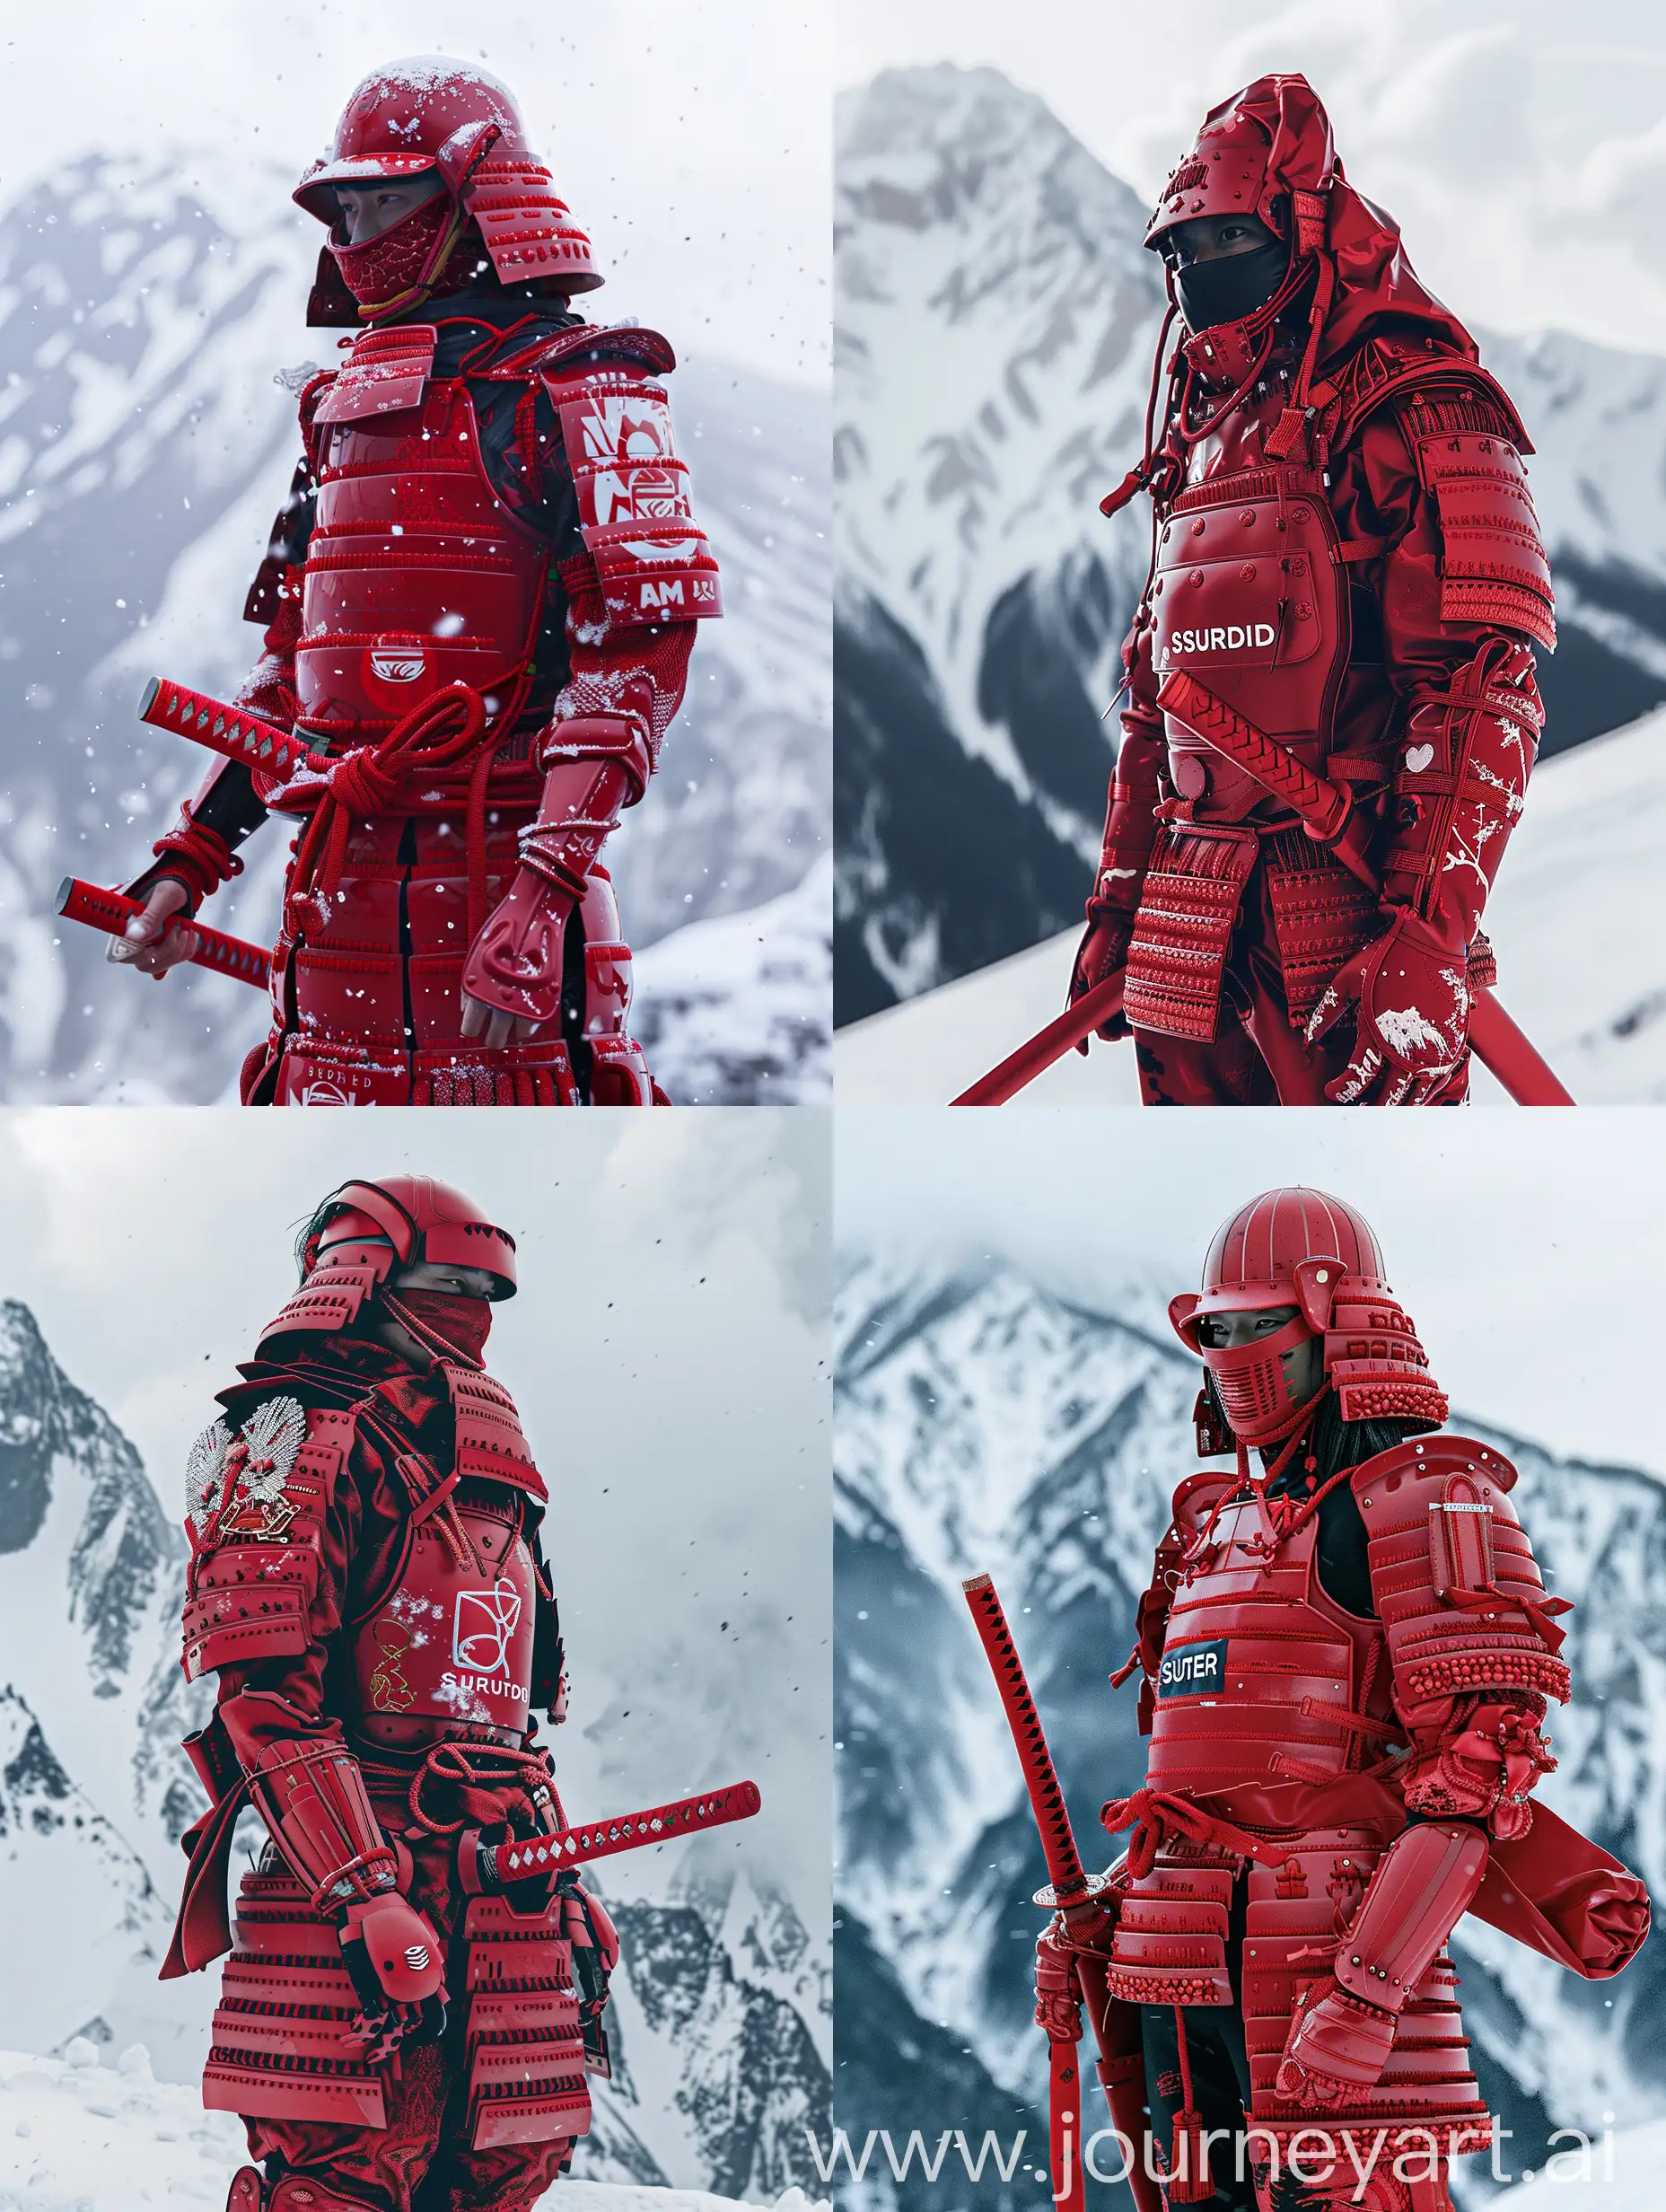 Modernized-Red-Samurai-Warrior-in-Snowy-Mountain-Landscape